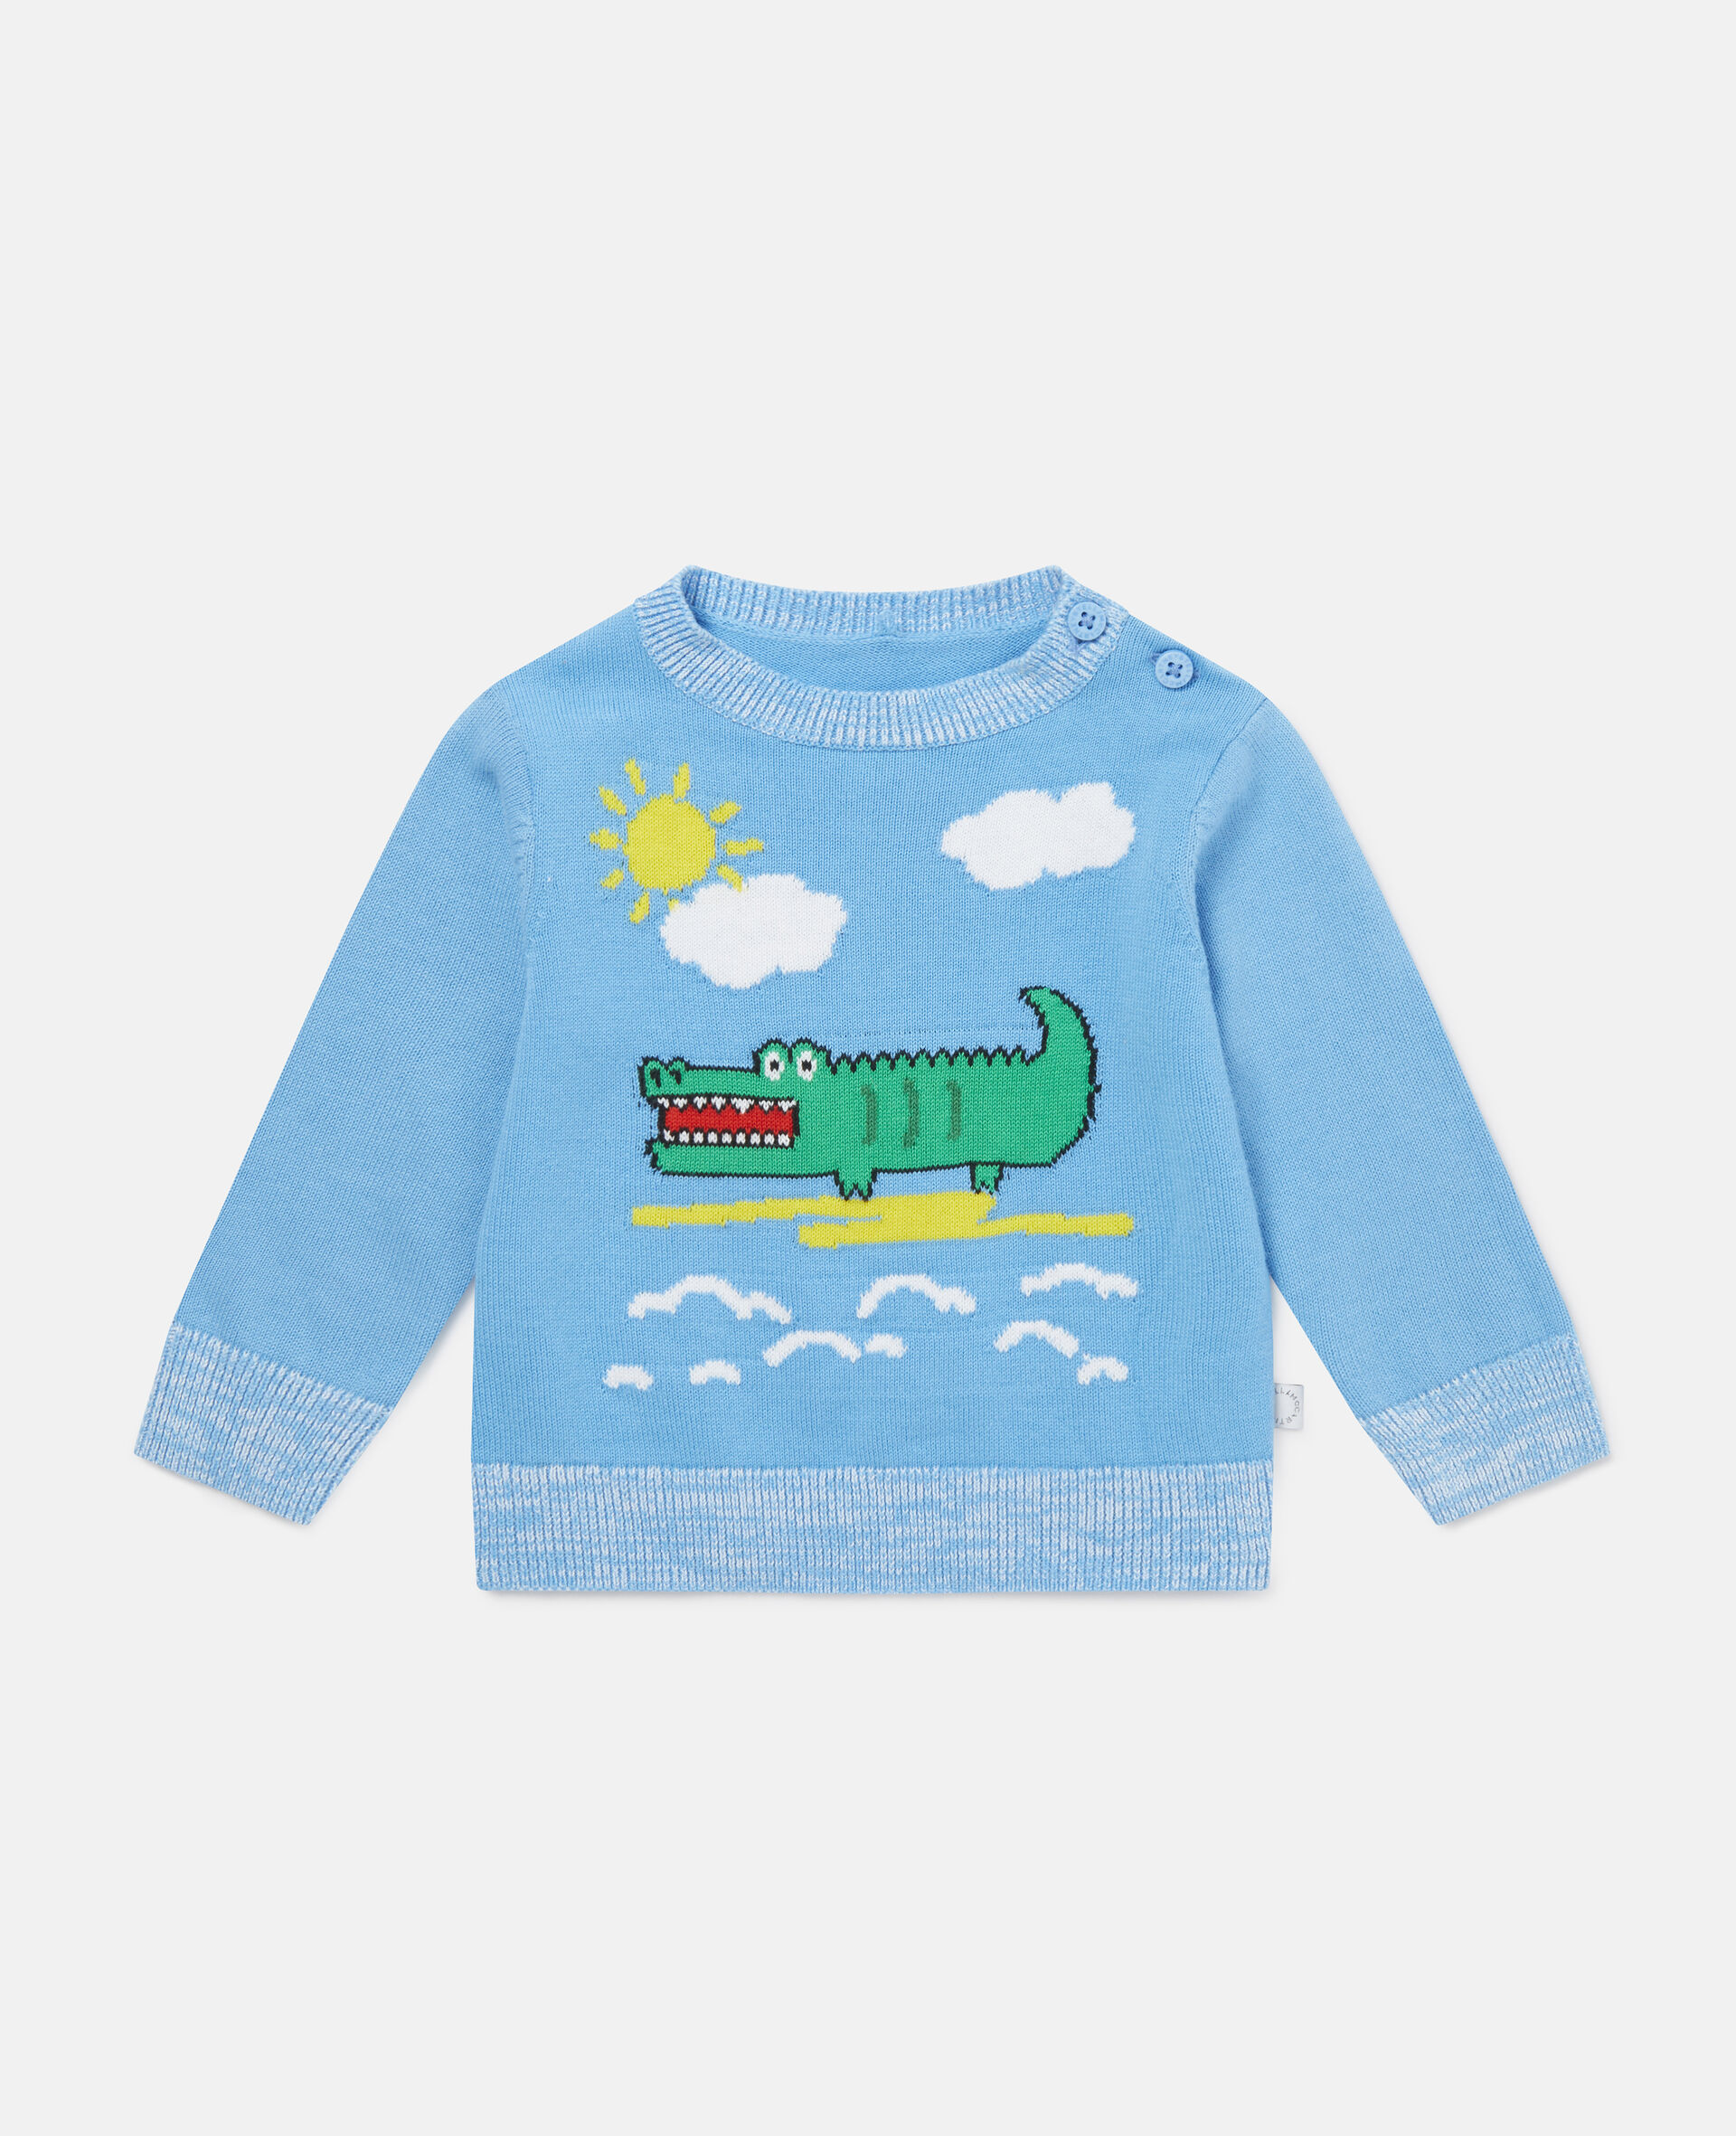 Crocodile Intarsia Knit Sweater-Blue-large image number 0